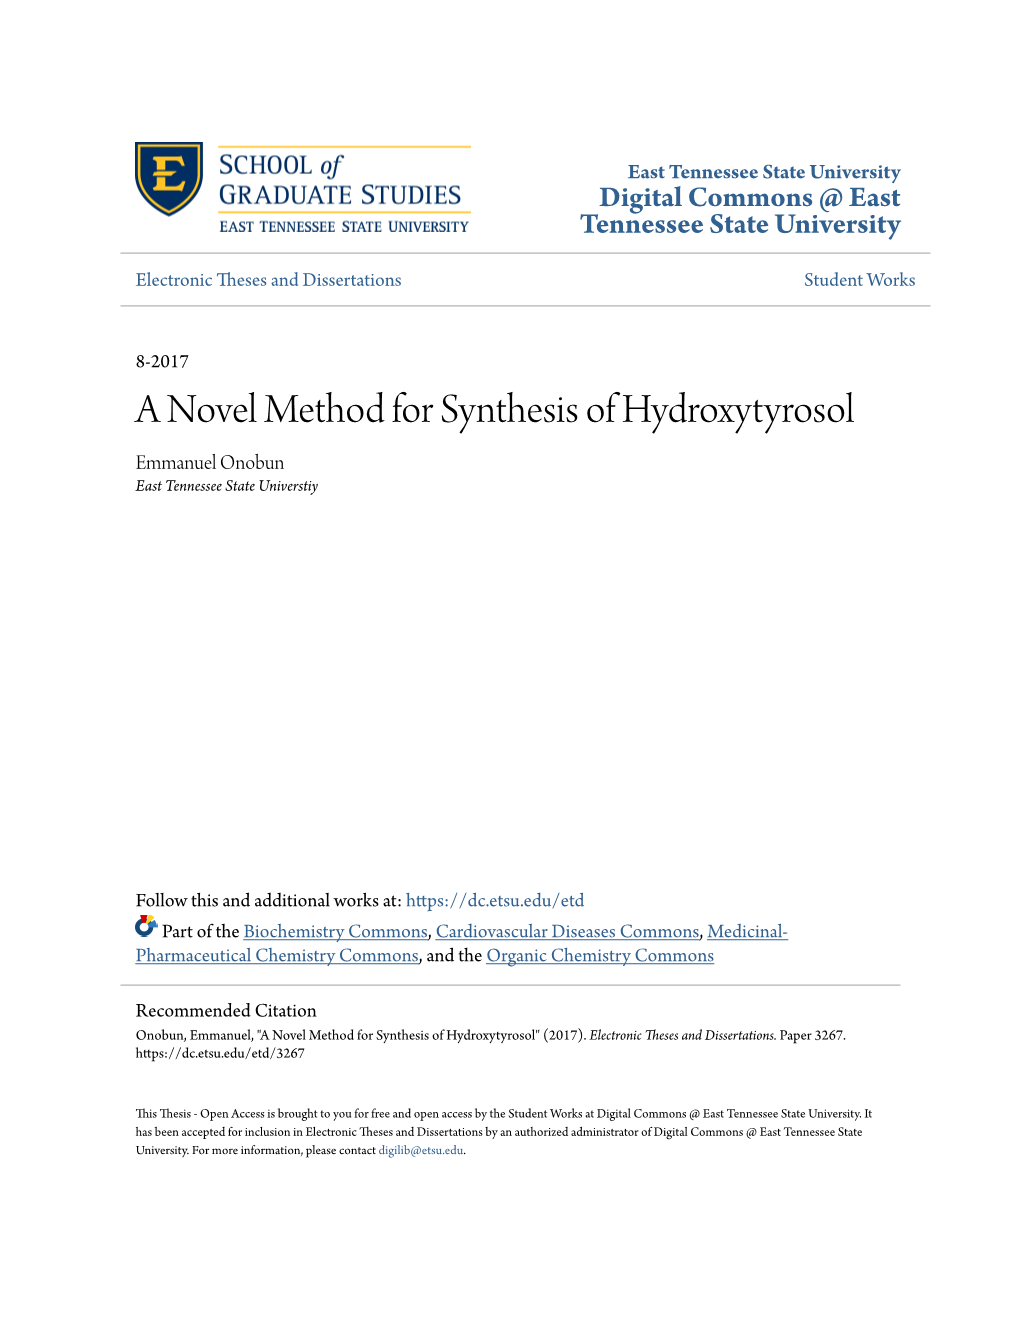 A Novel Method for Synthesis of Hydroxytyrosol Emmanuel Onobun East Tennessee State Universtiy